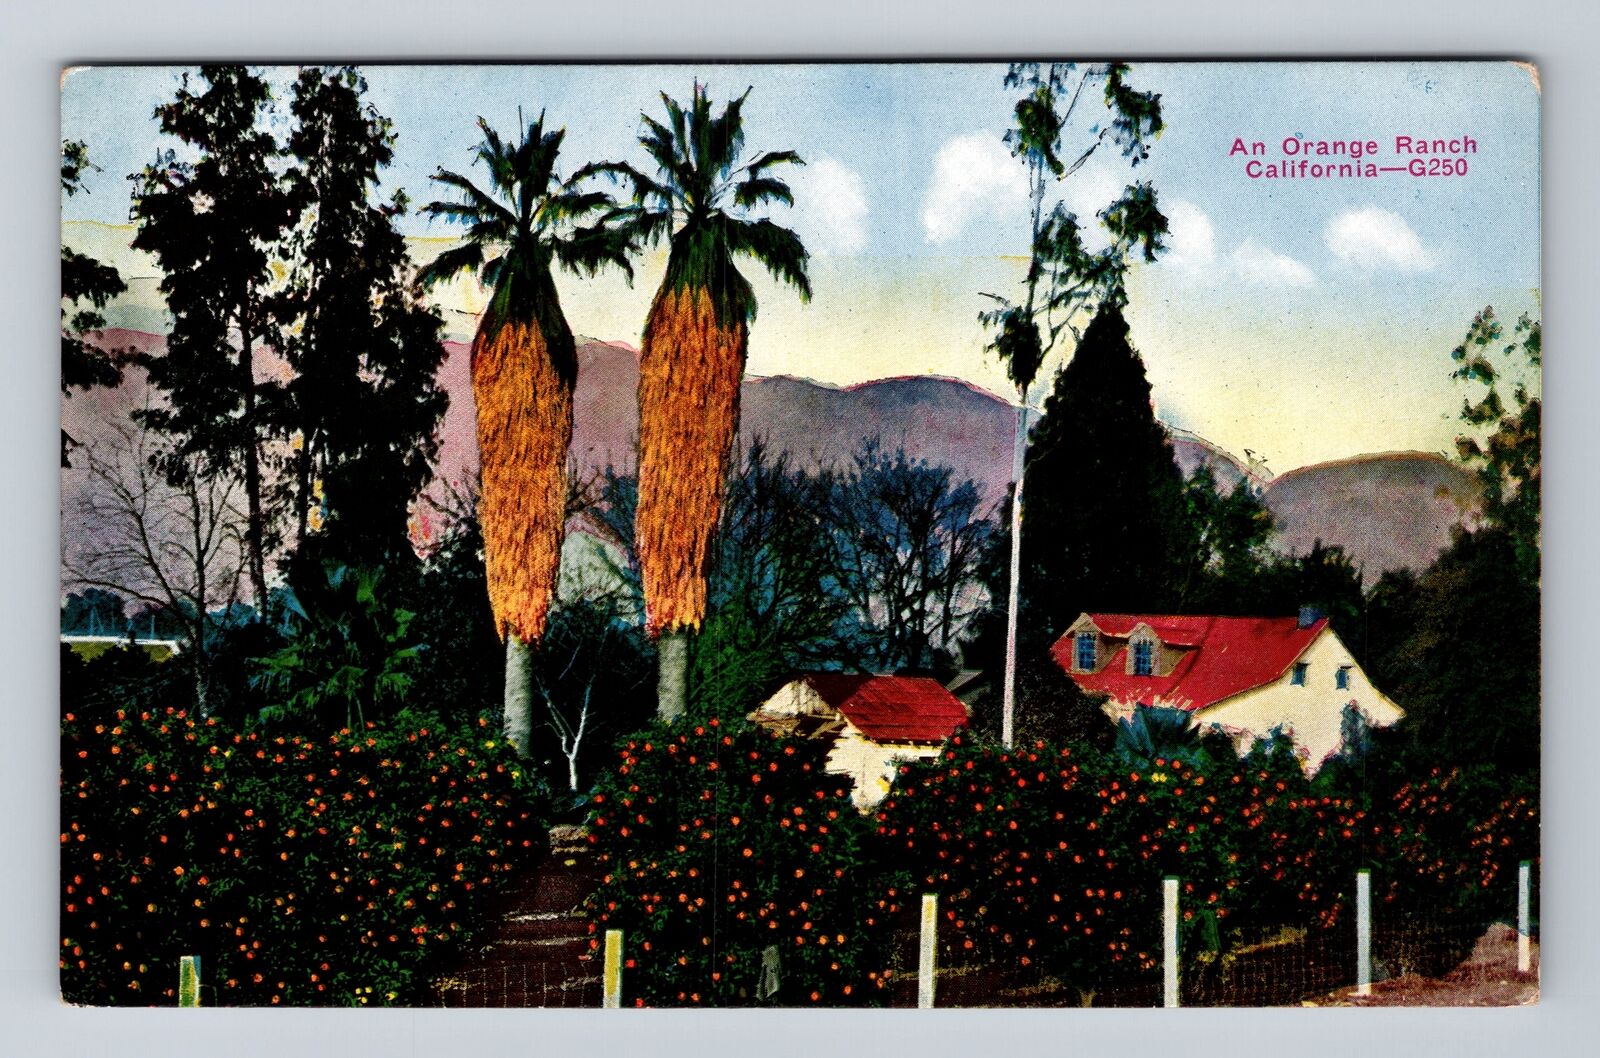 CA-California, An Orange Ranch, Antique, Vintage Postcard